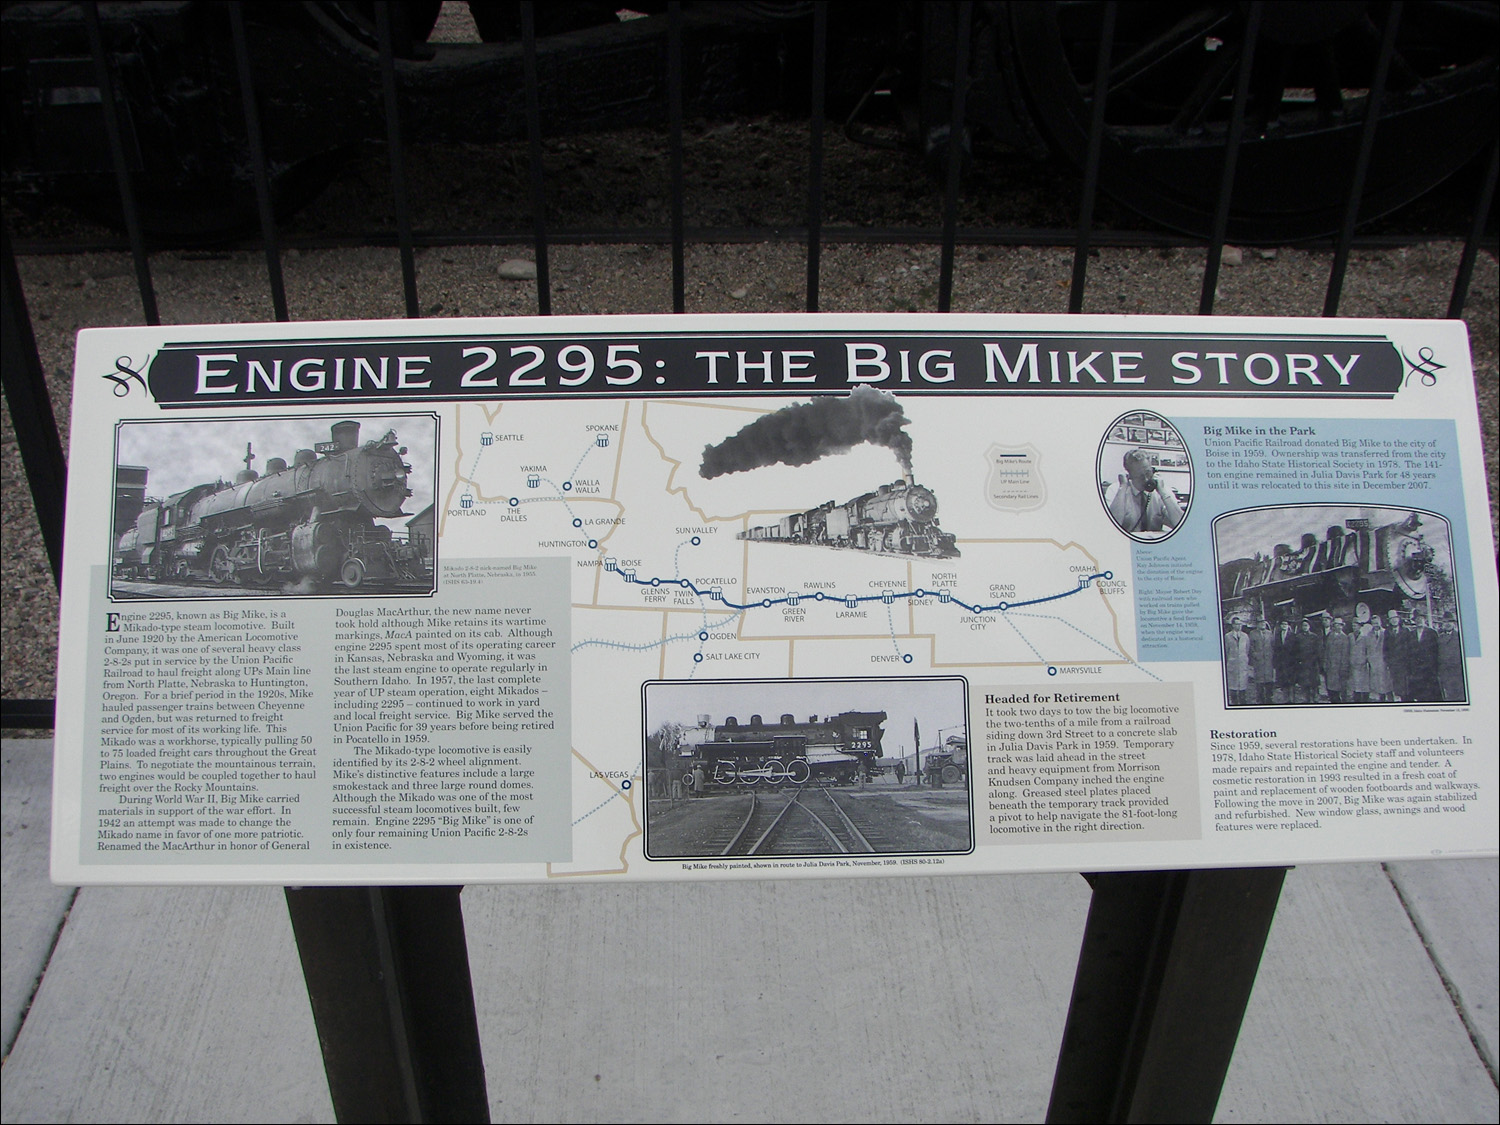 Boise Train Depot Big Mike facts